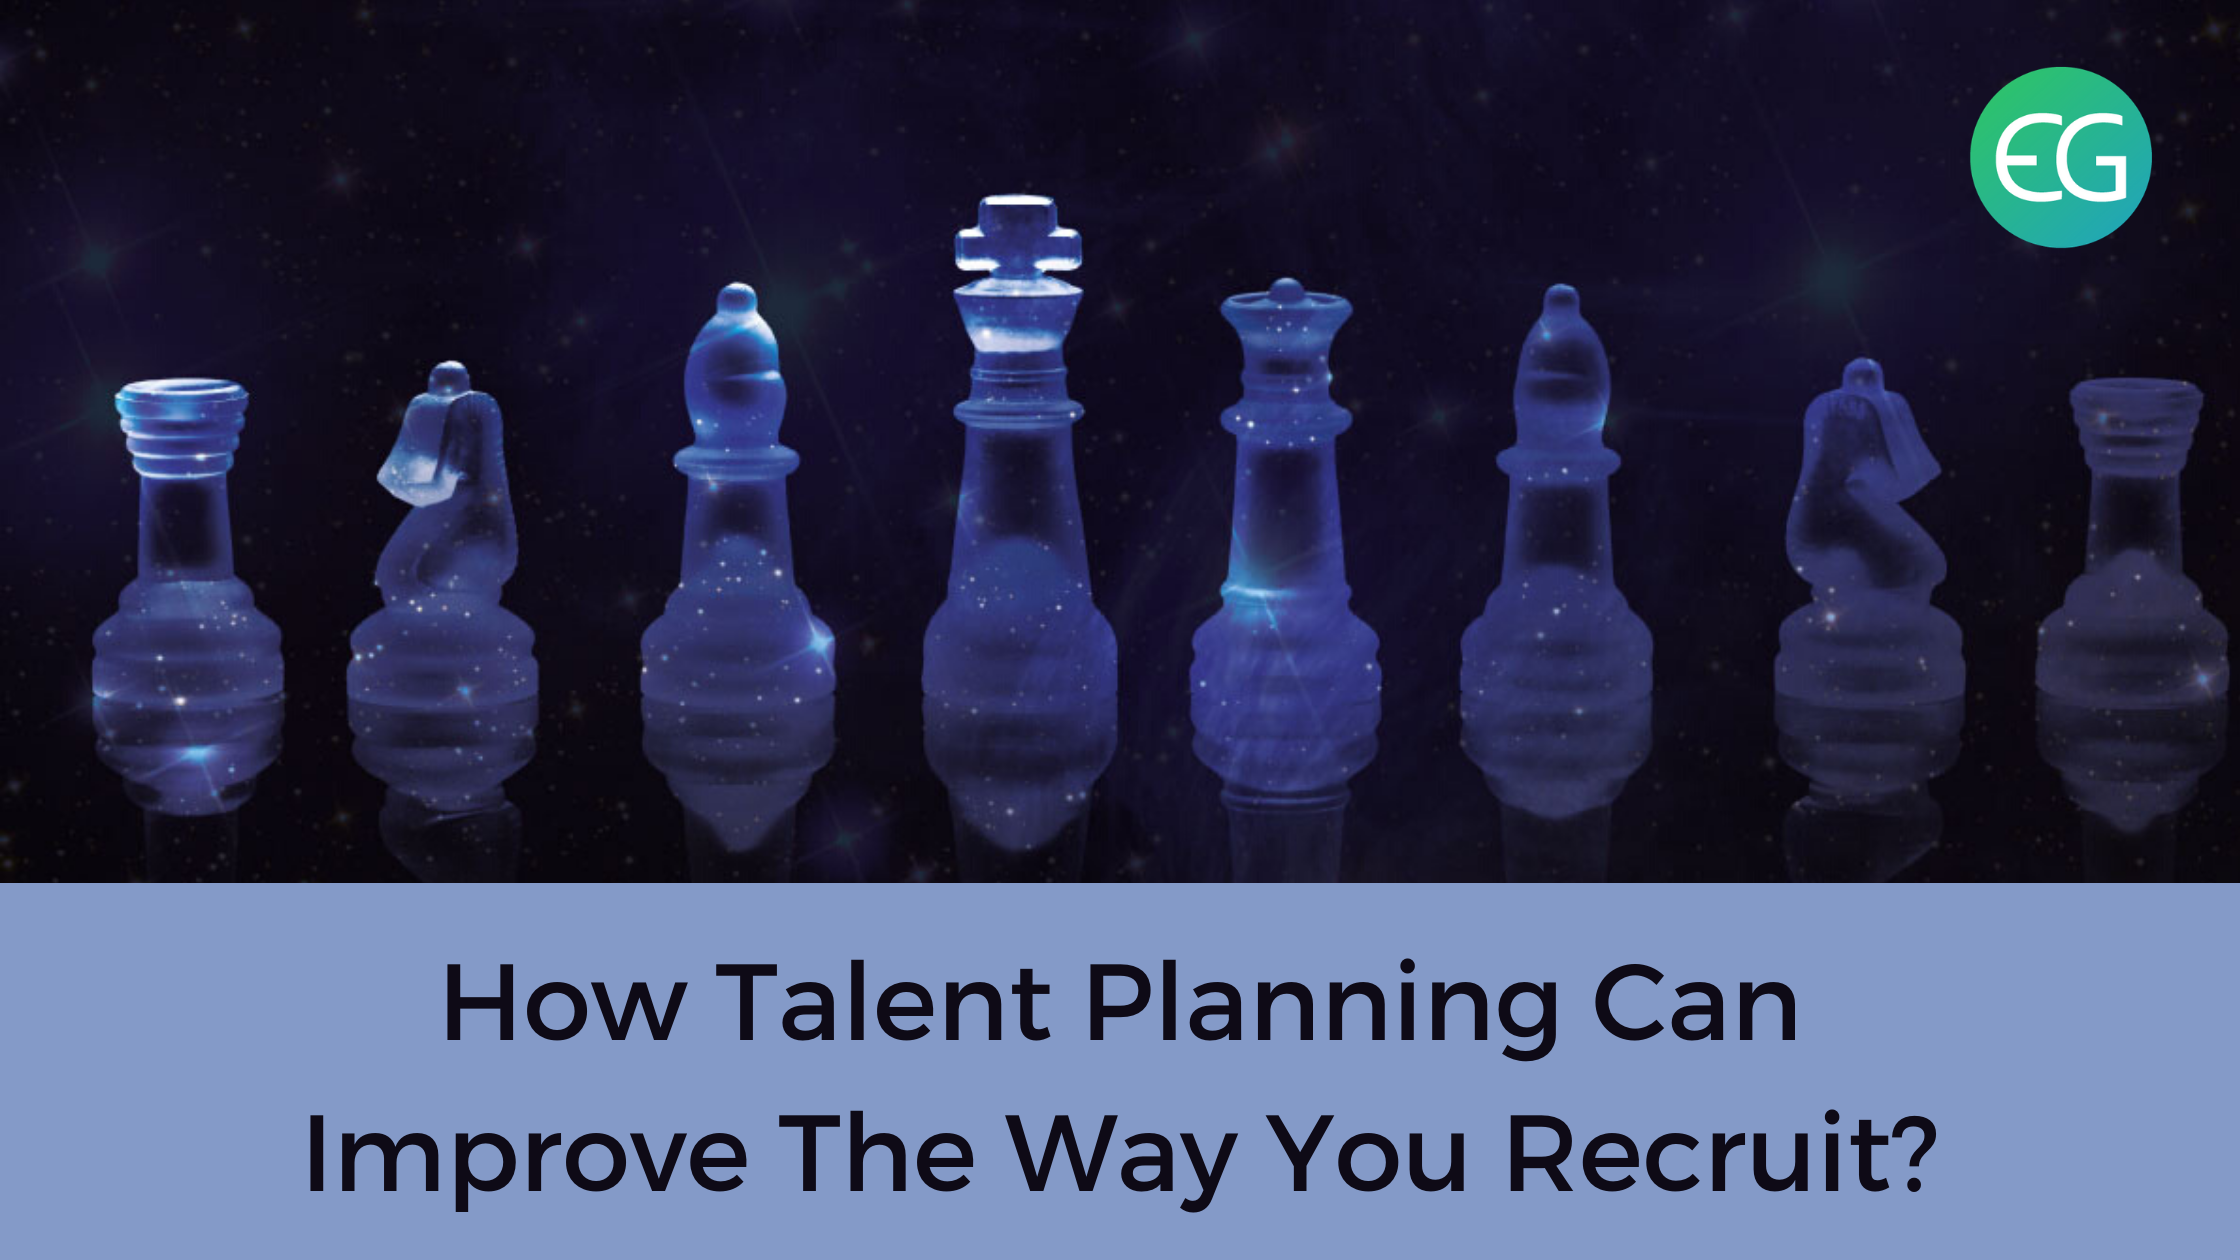 Talent Planning